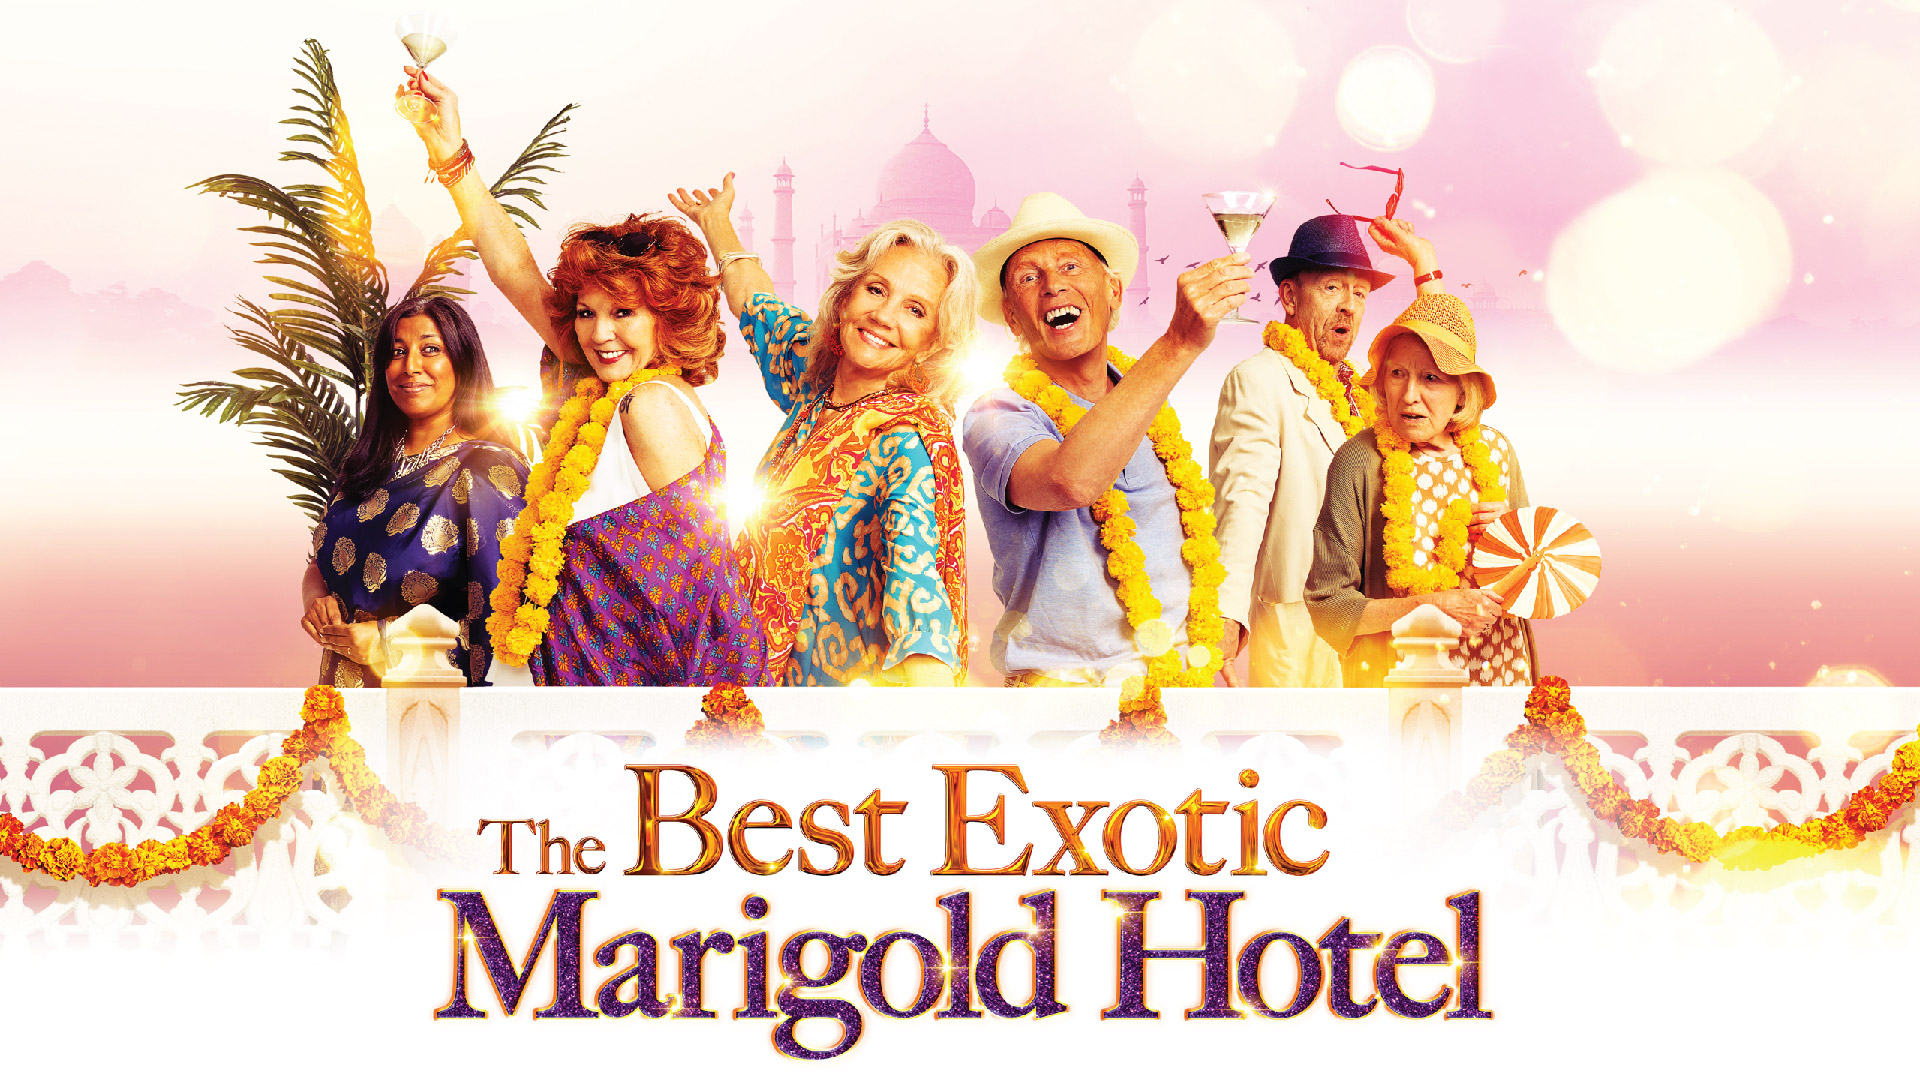 Best exotic marigold hotel